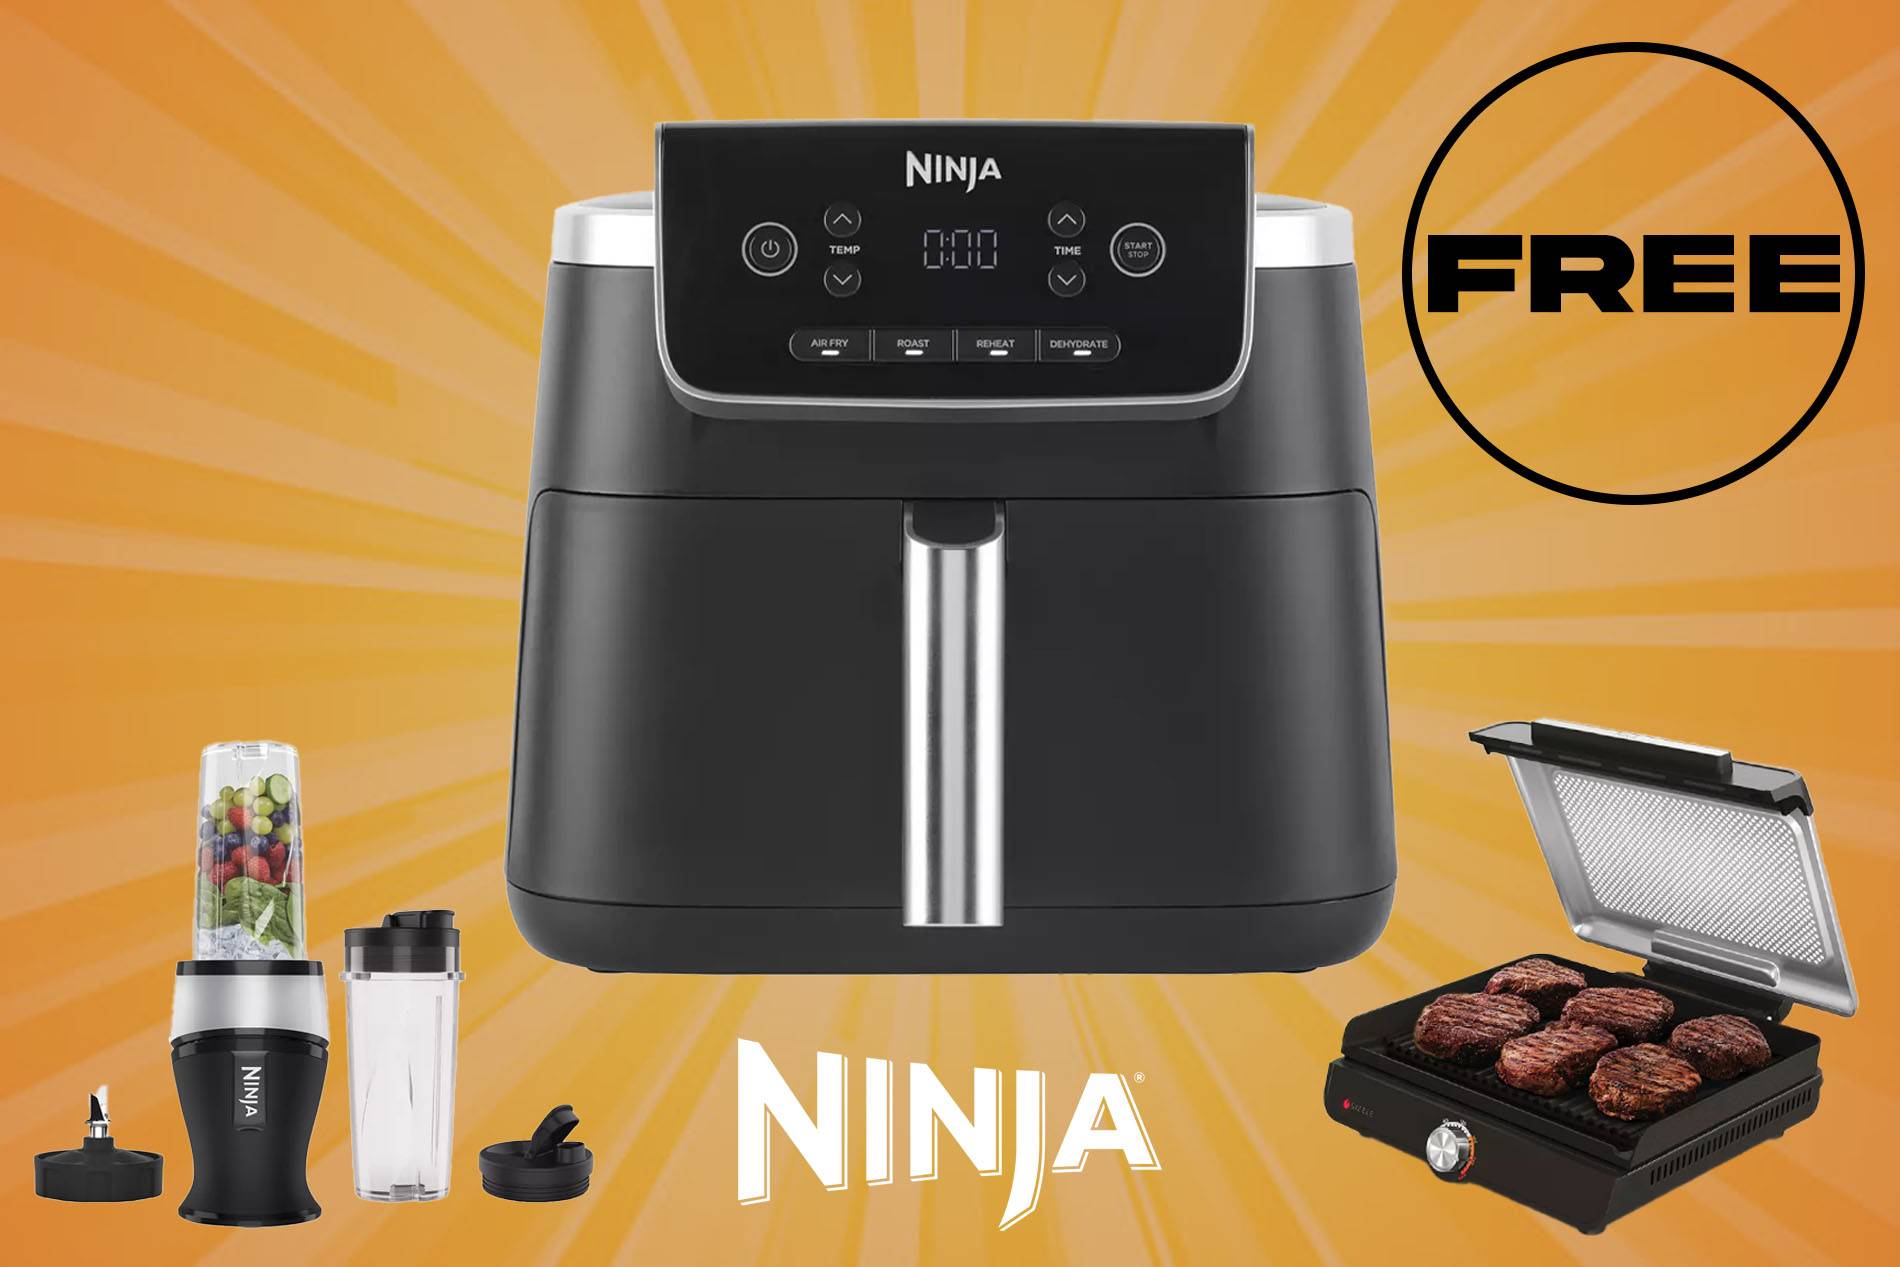 Free To Enter: Ninja Pro Air Fryer (Spend £1+ to also win Ninja Blender & Ninja Grill)